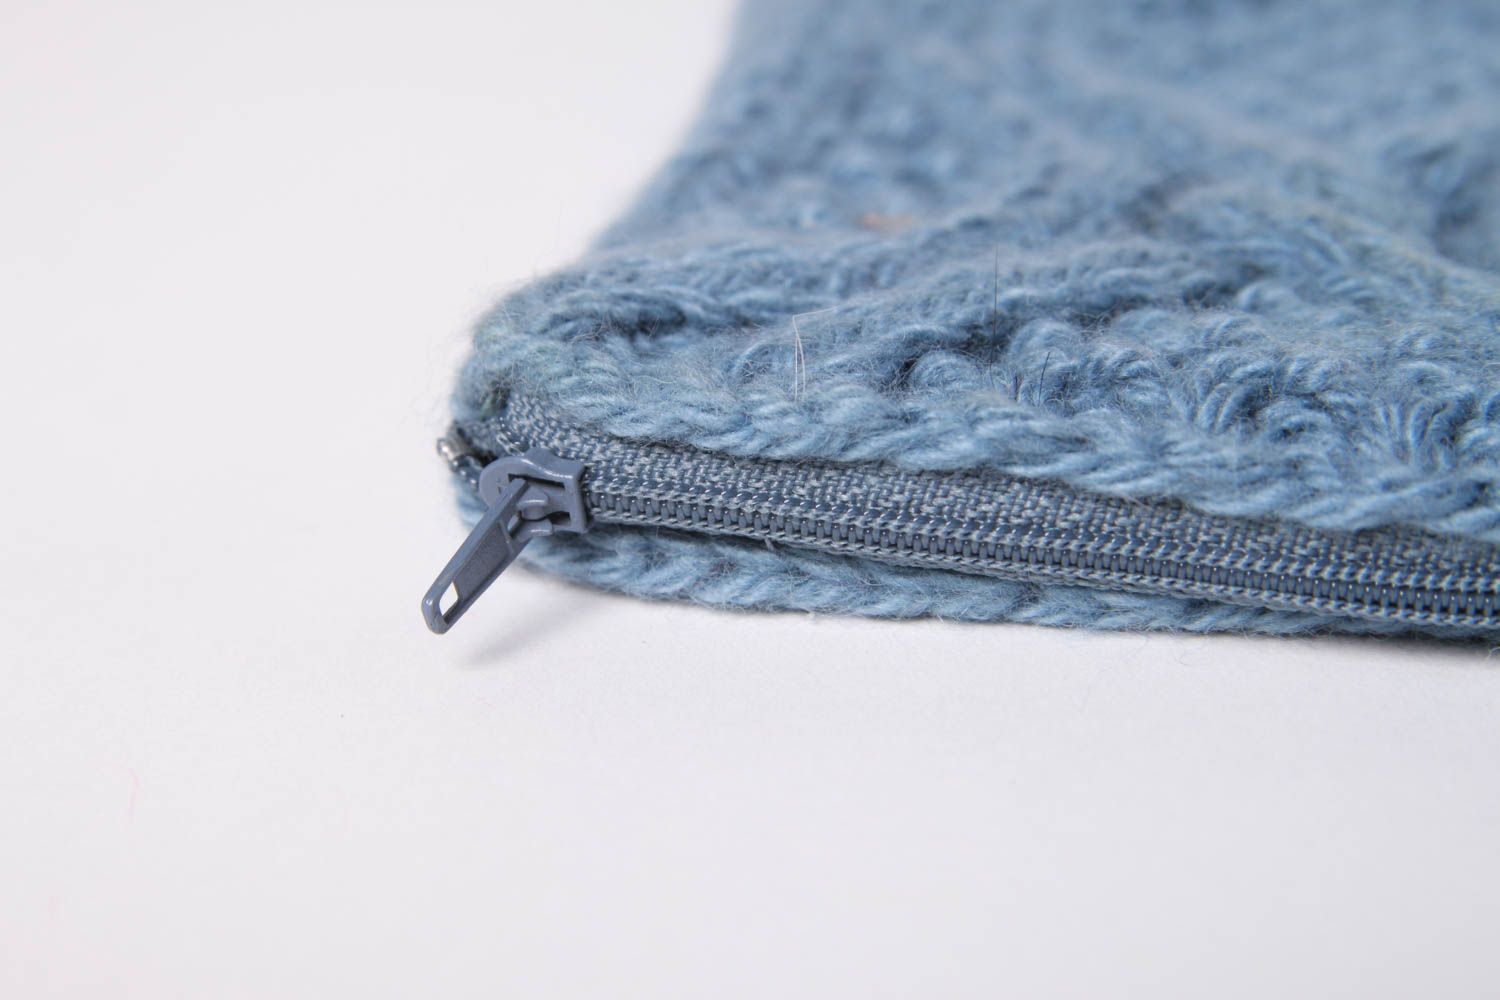 Woolen pillowcase decorative knitted element designer cushion home decoration photo 4